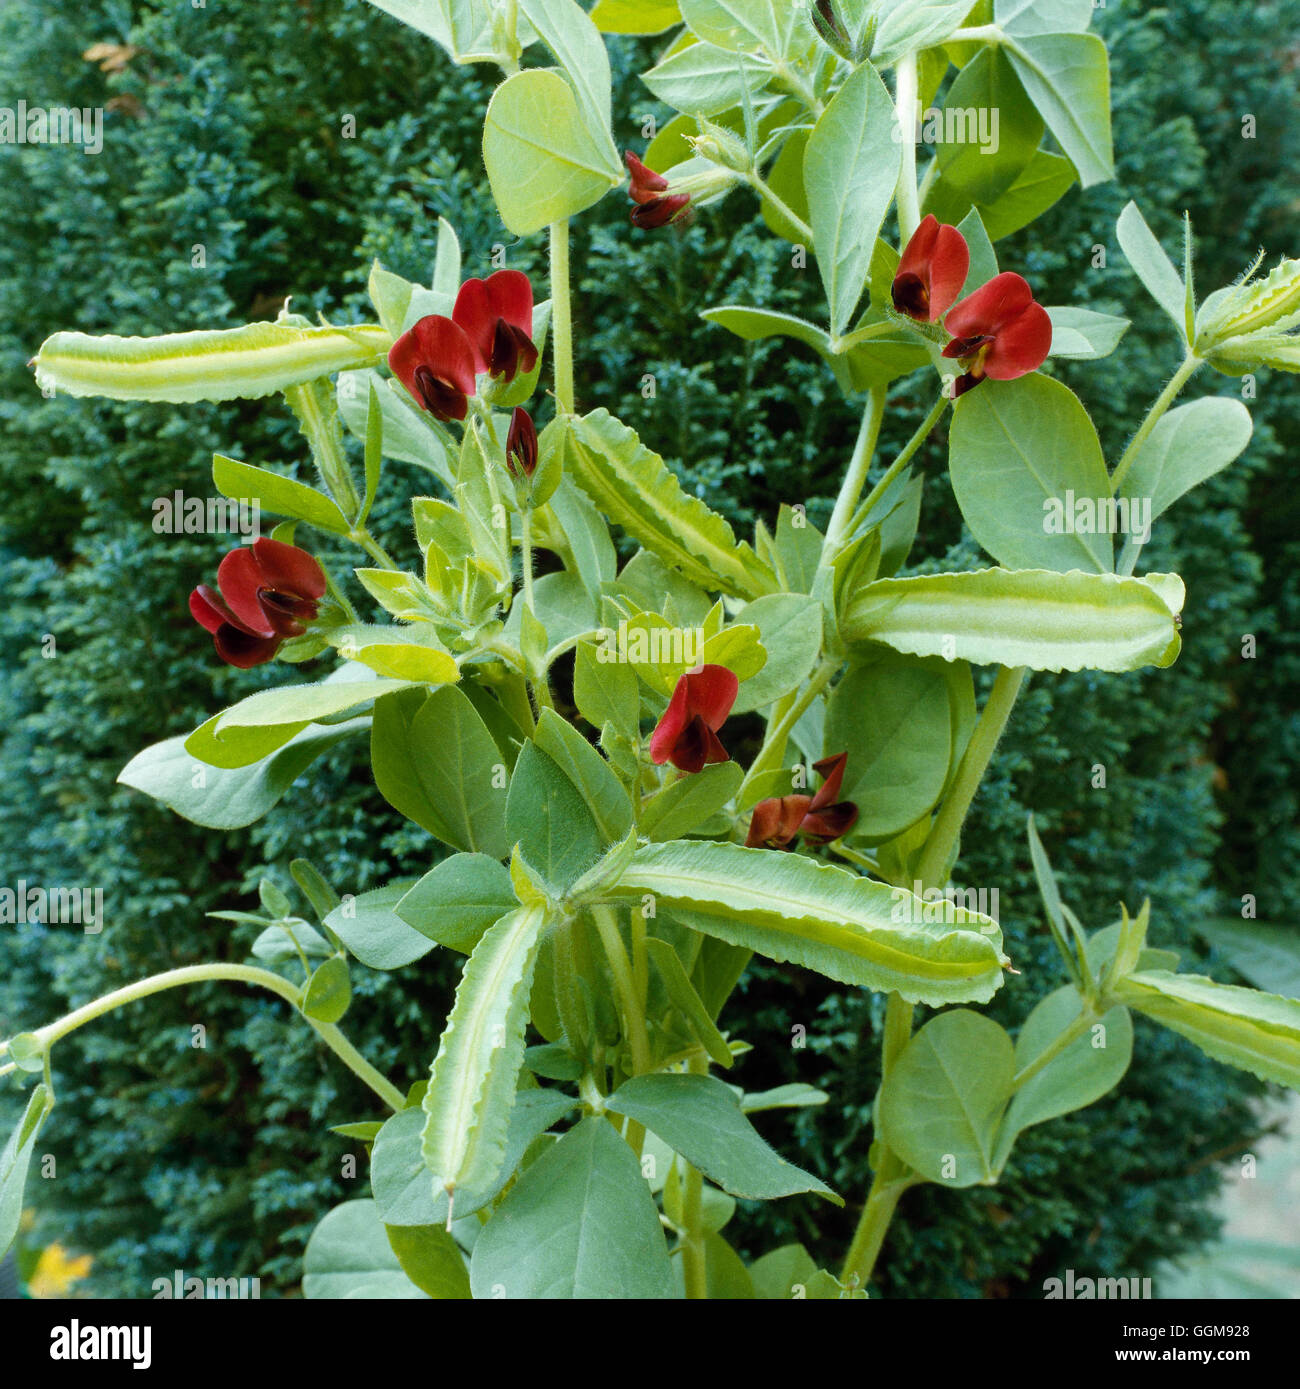 Asparagi - Pisello pisello alato Tetragonolobus purpureus (Syn. Lotus tetragonolobus)' VEG051779 obbligatorio di credito" Foto Stock